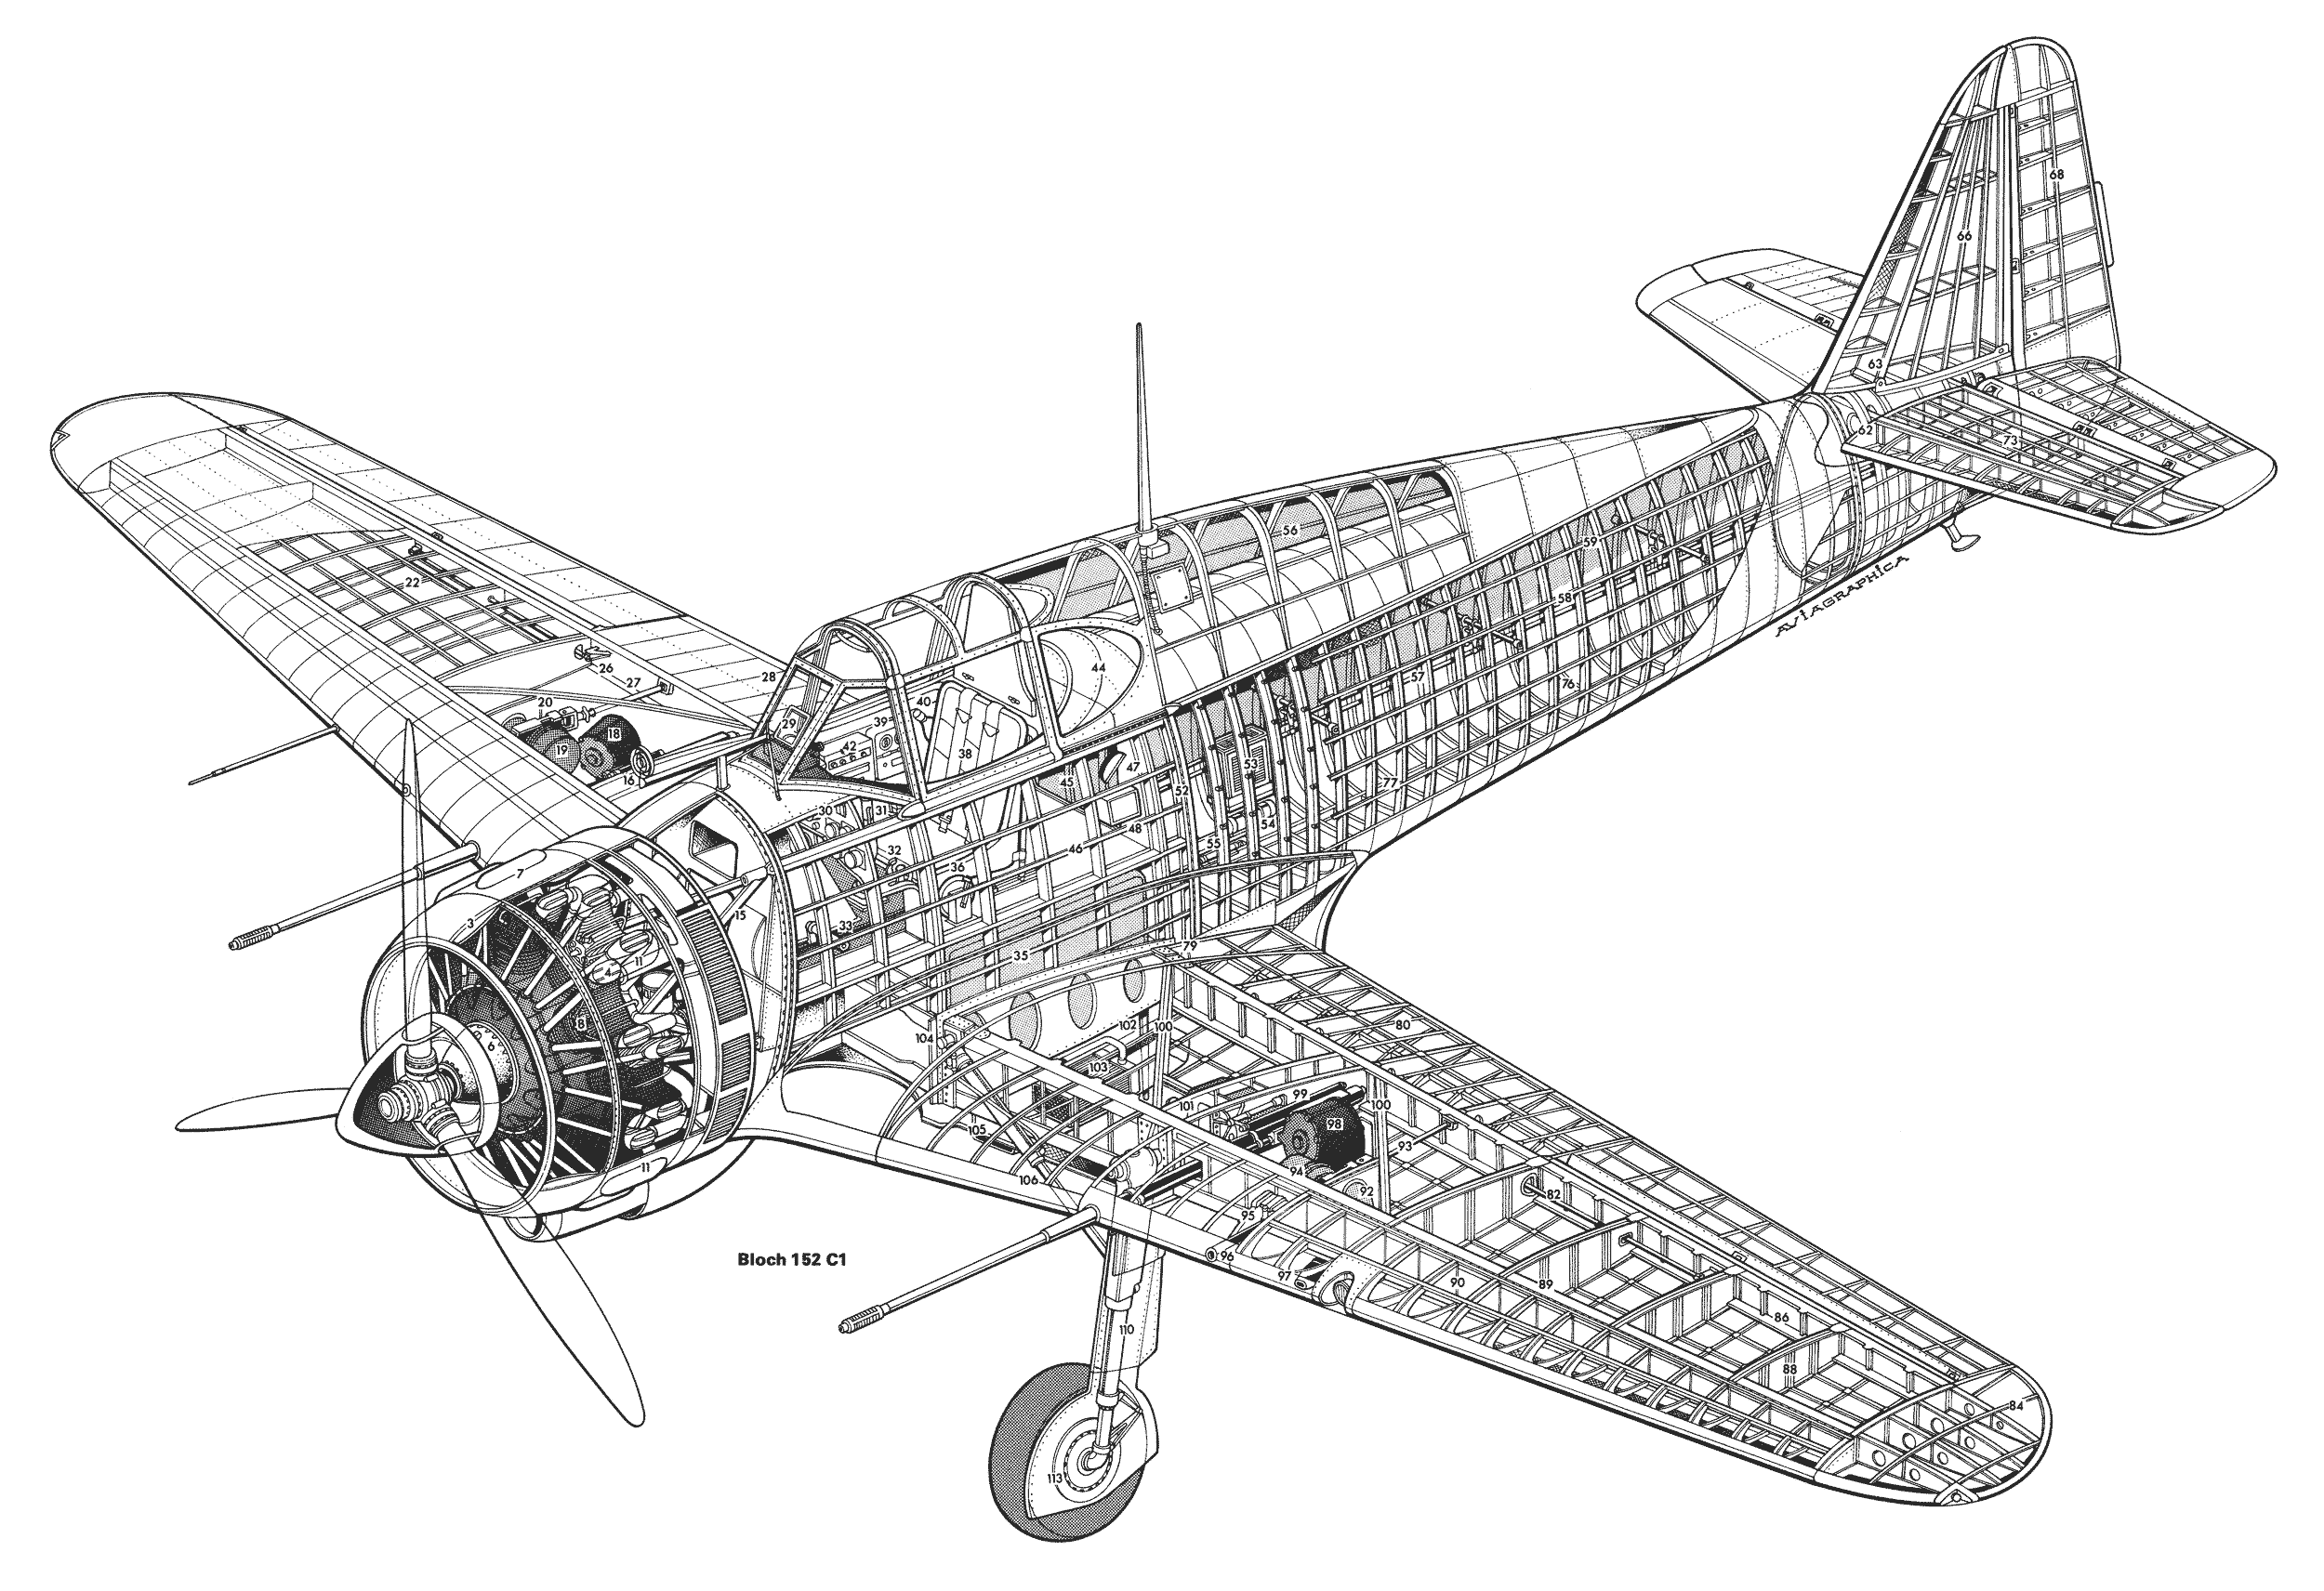 Bloch MB.150 cutaway